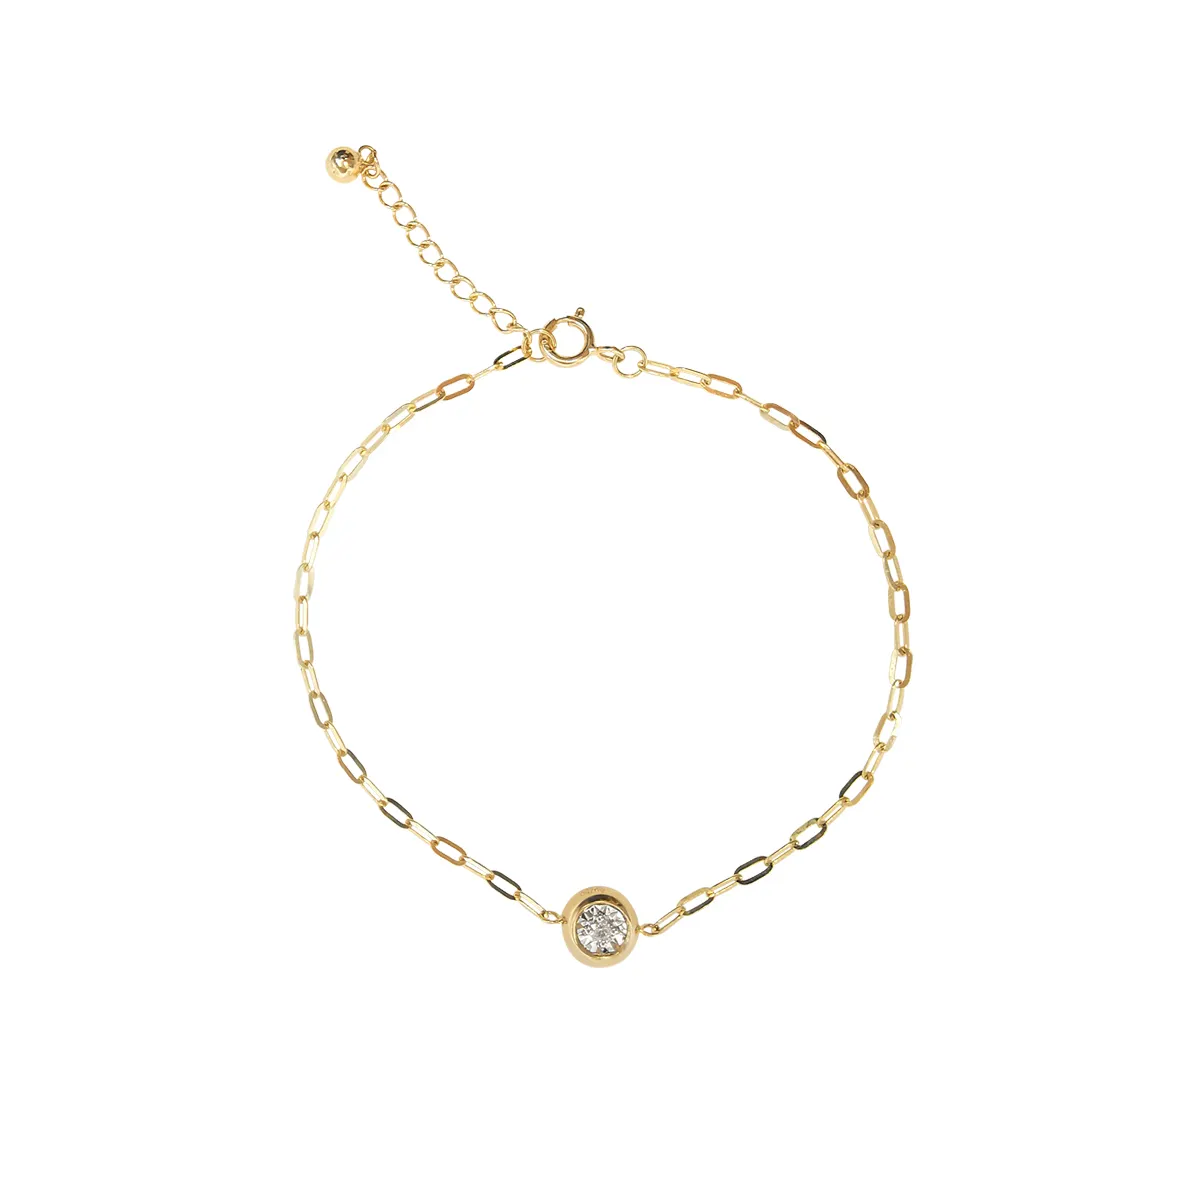 Popular Jewelry AU750 Gold VVS Moissanite Pendant Bracelet New Arrival Classic Fashionable Design 18K Genuine Gold